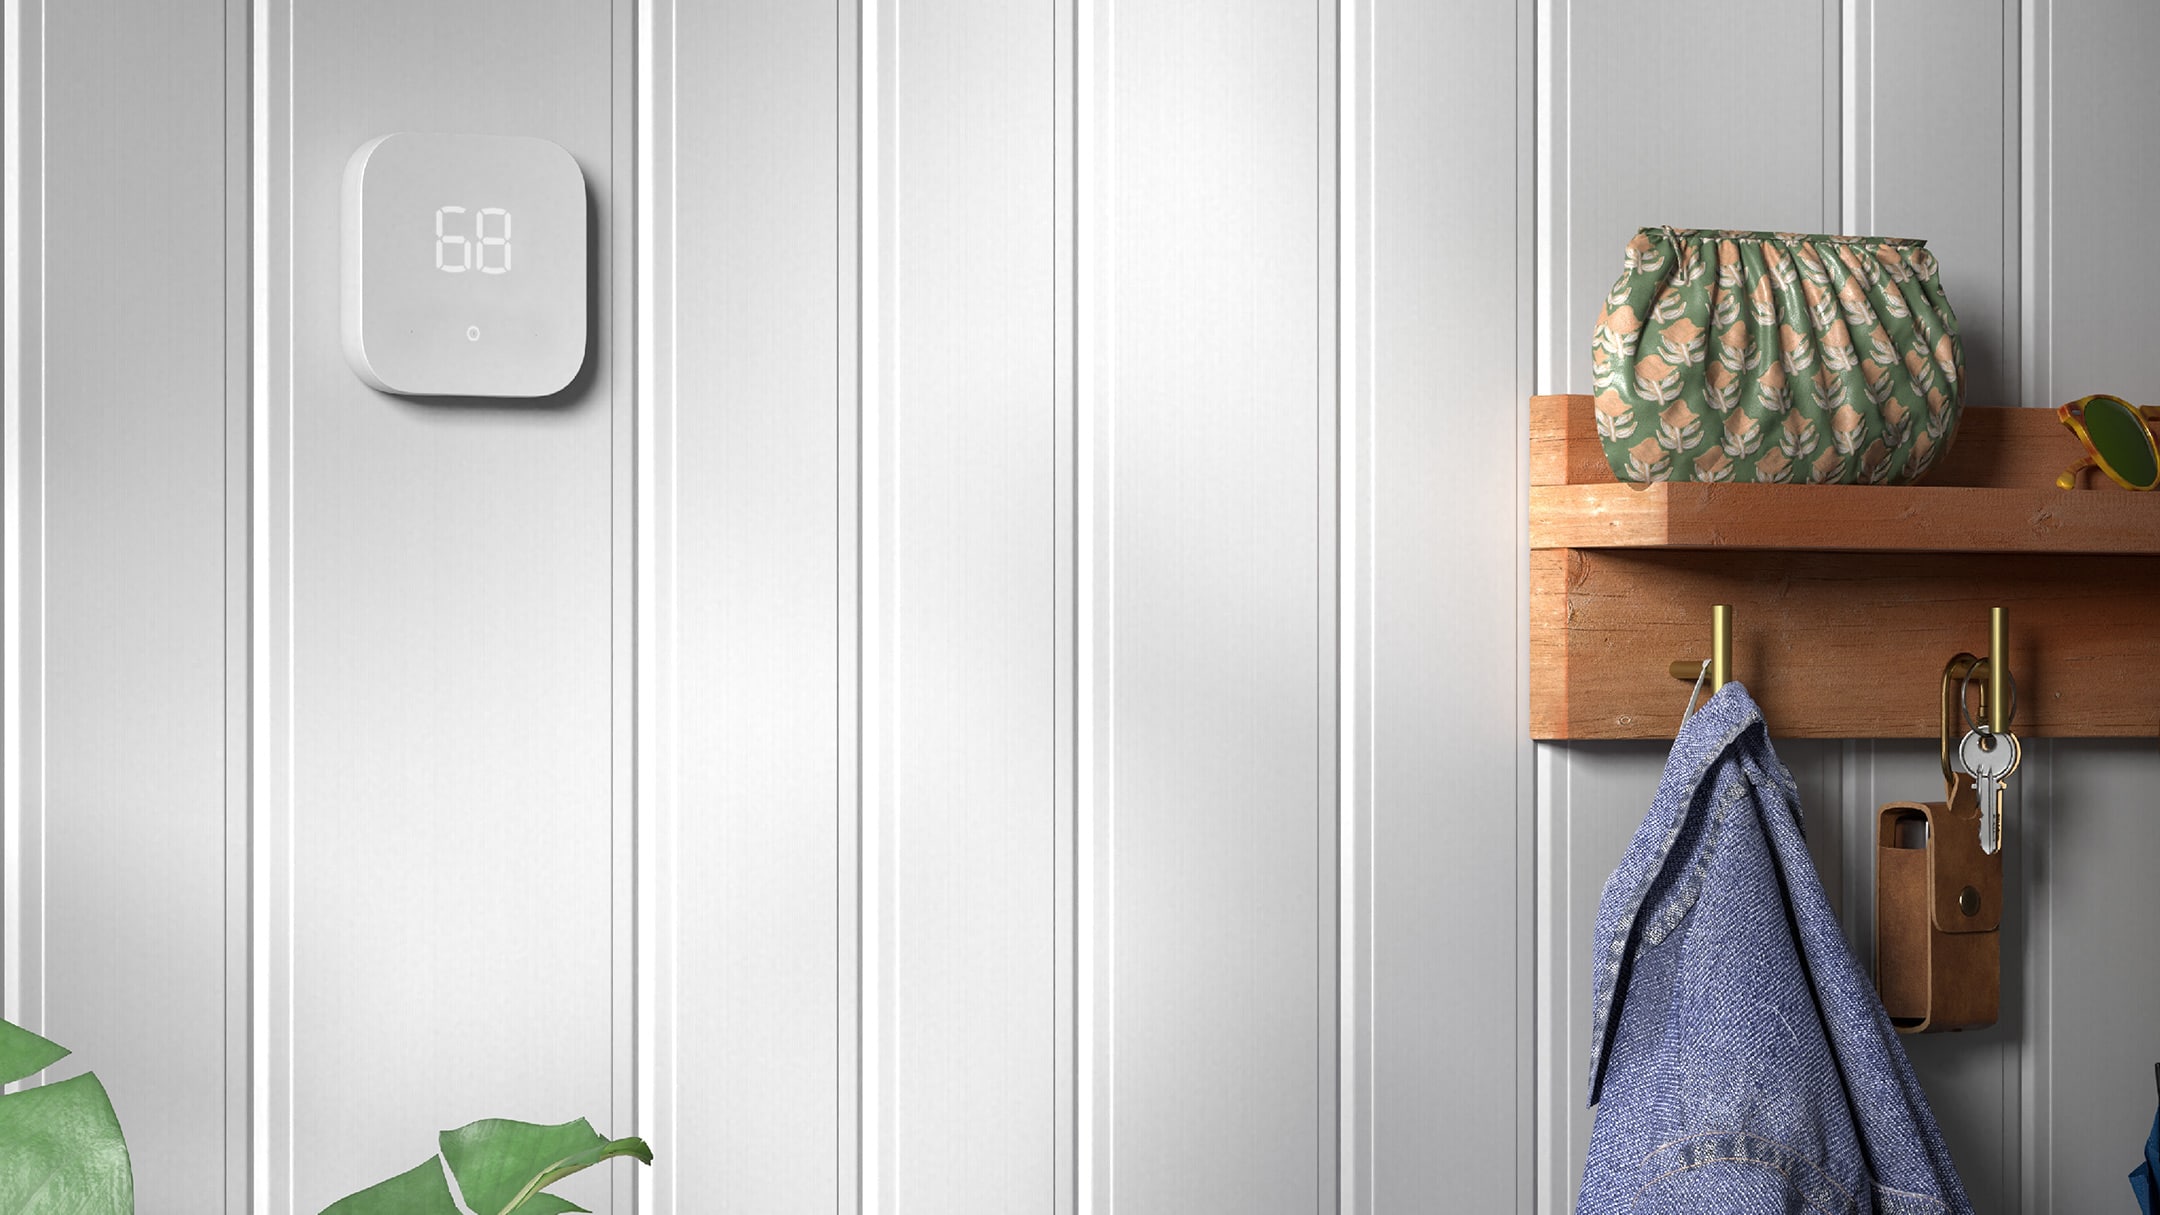 Alexa smart home device on white wall